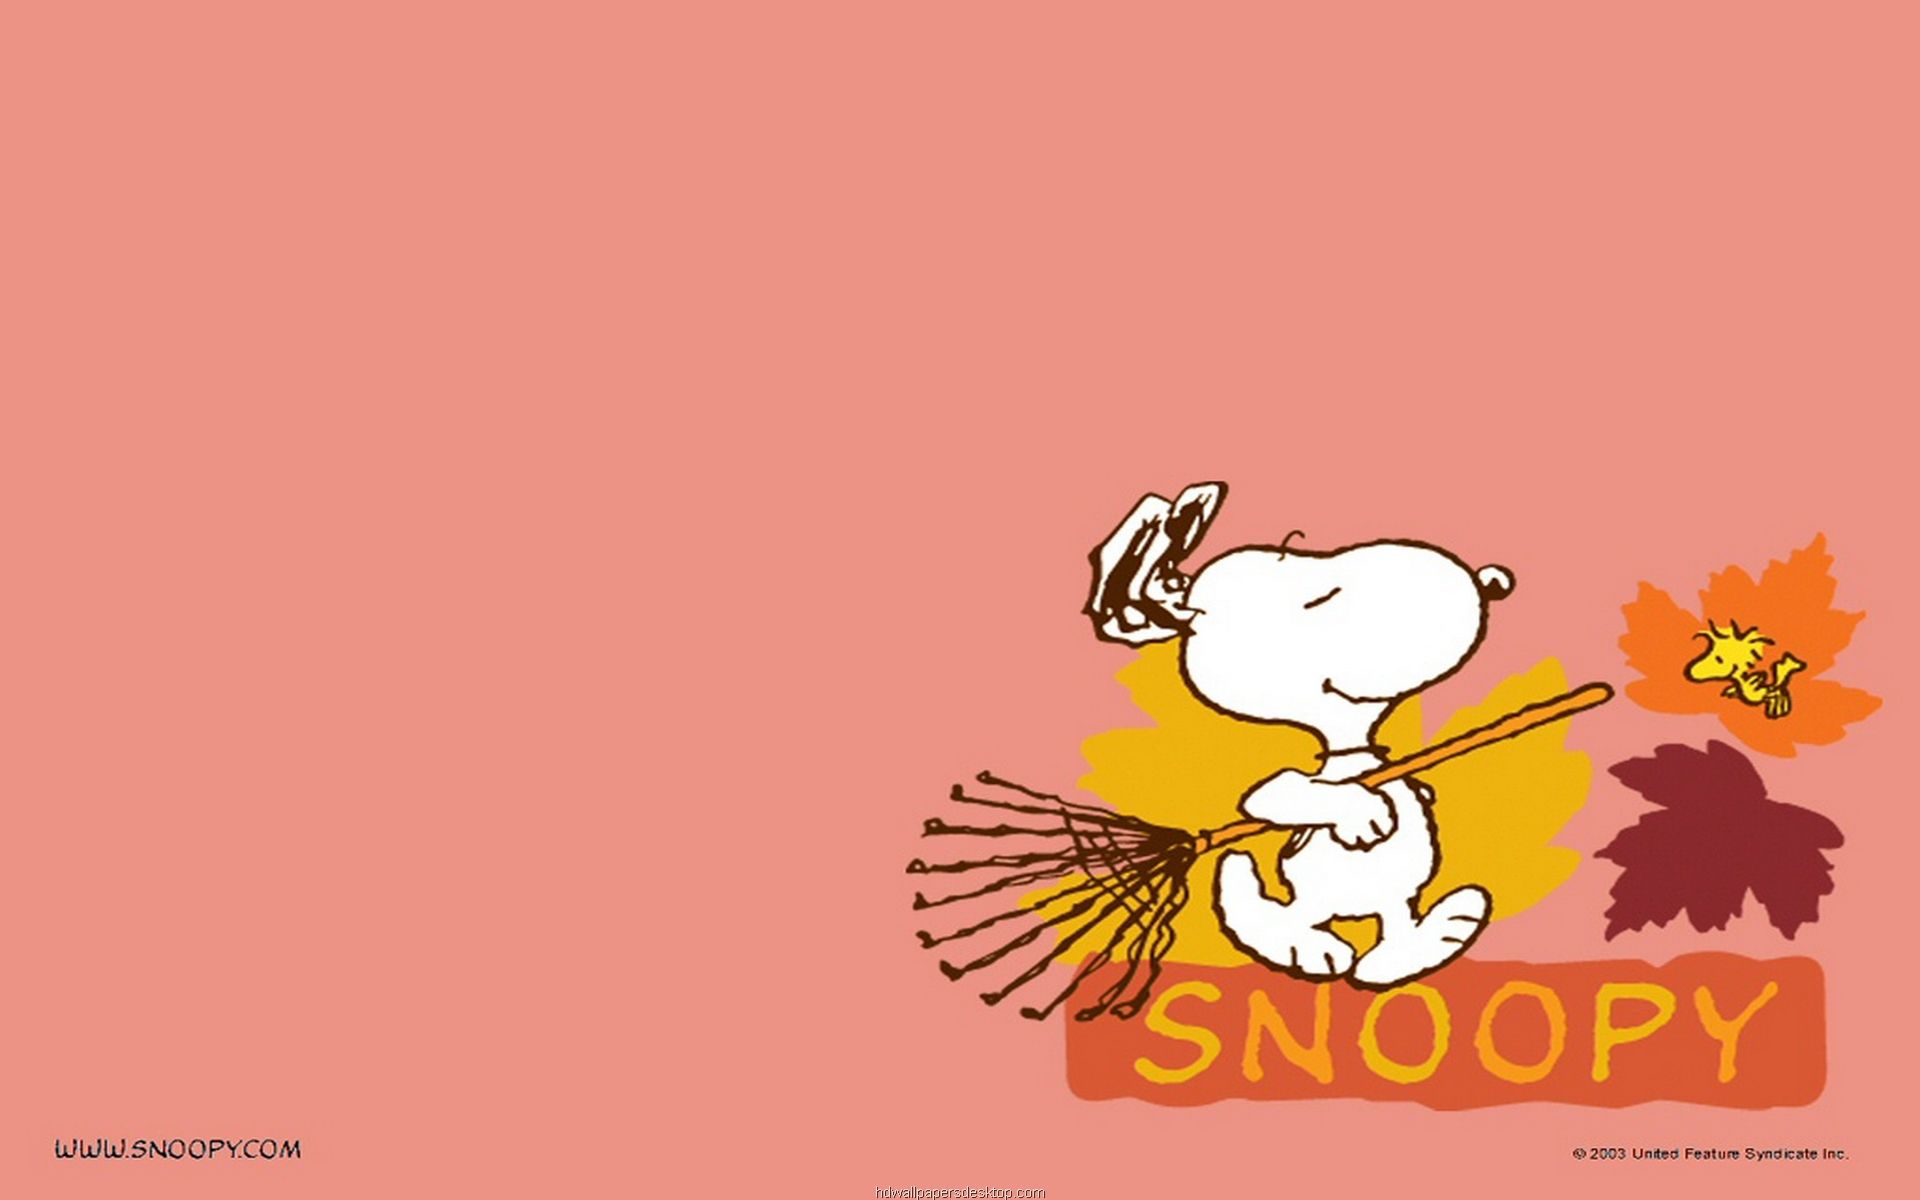 Snoopy Wallpaper Free